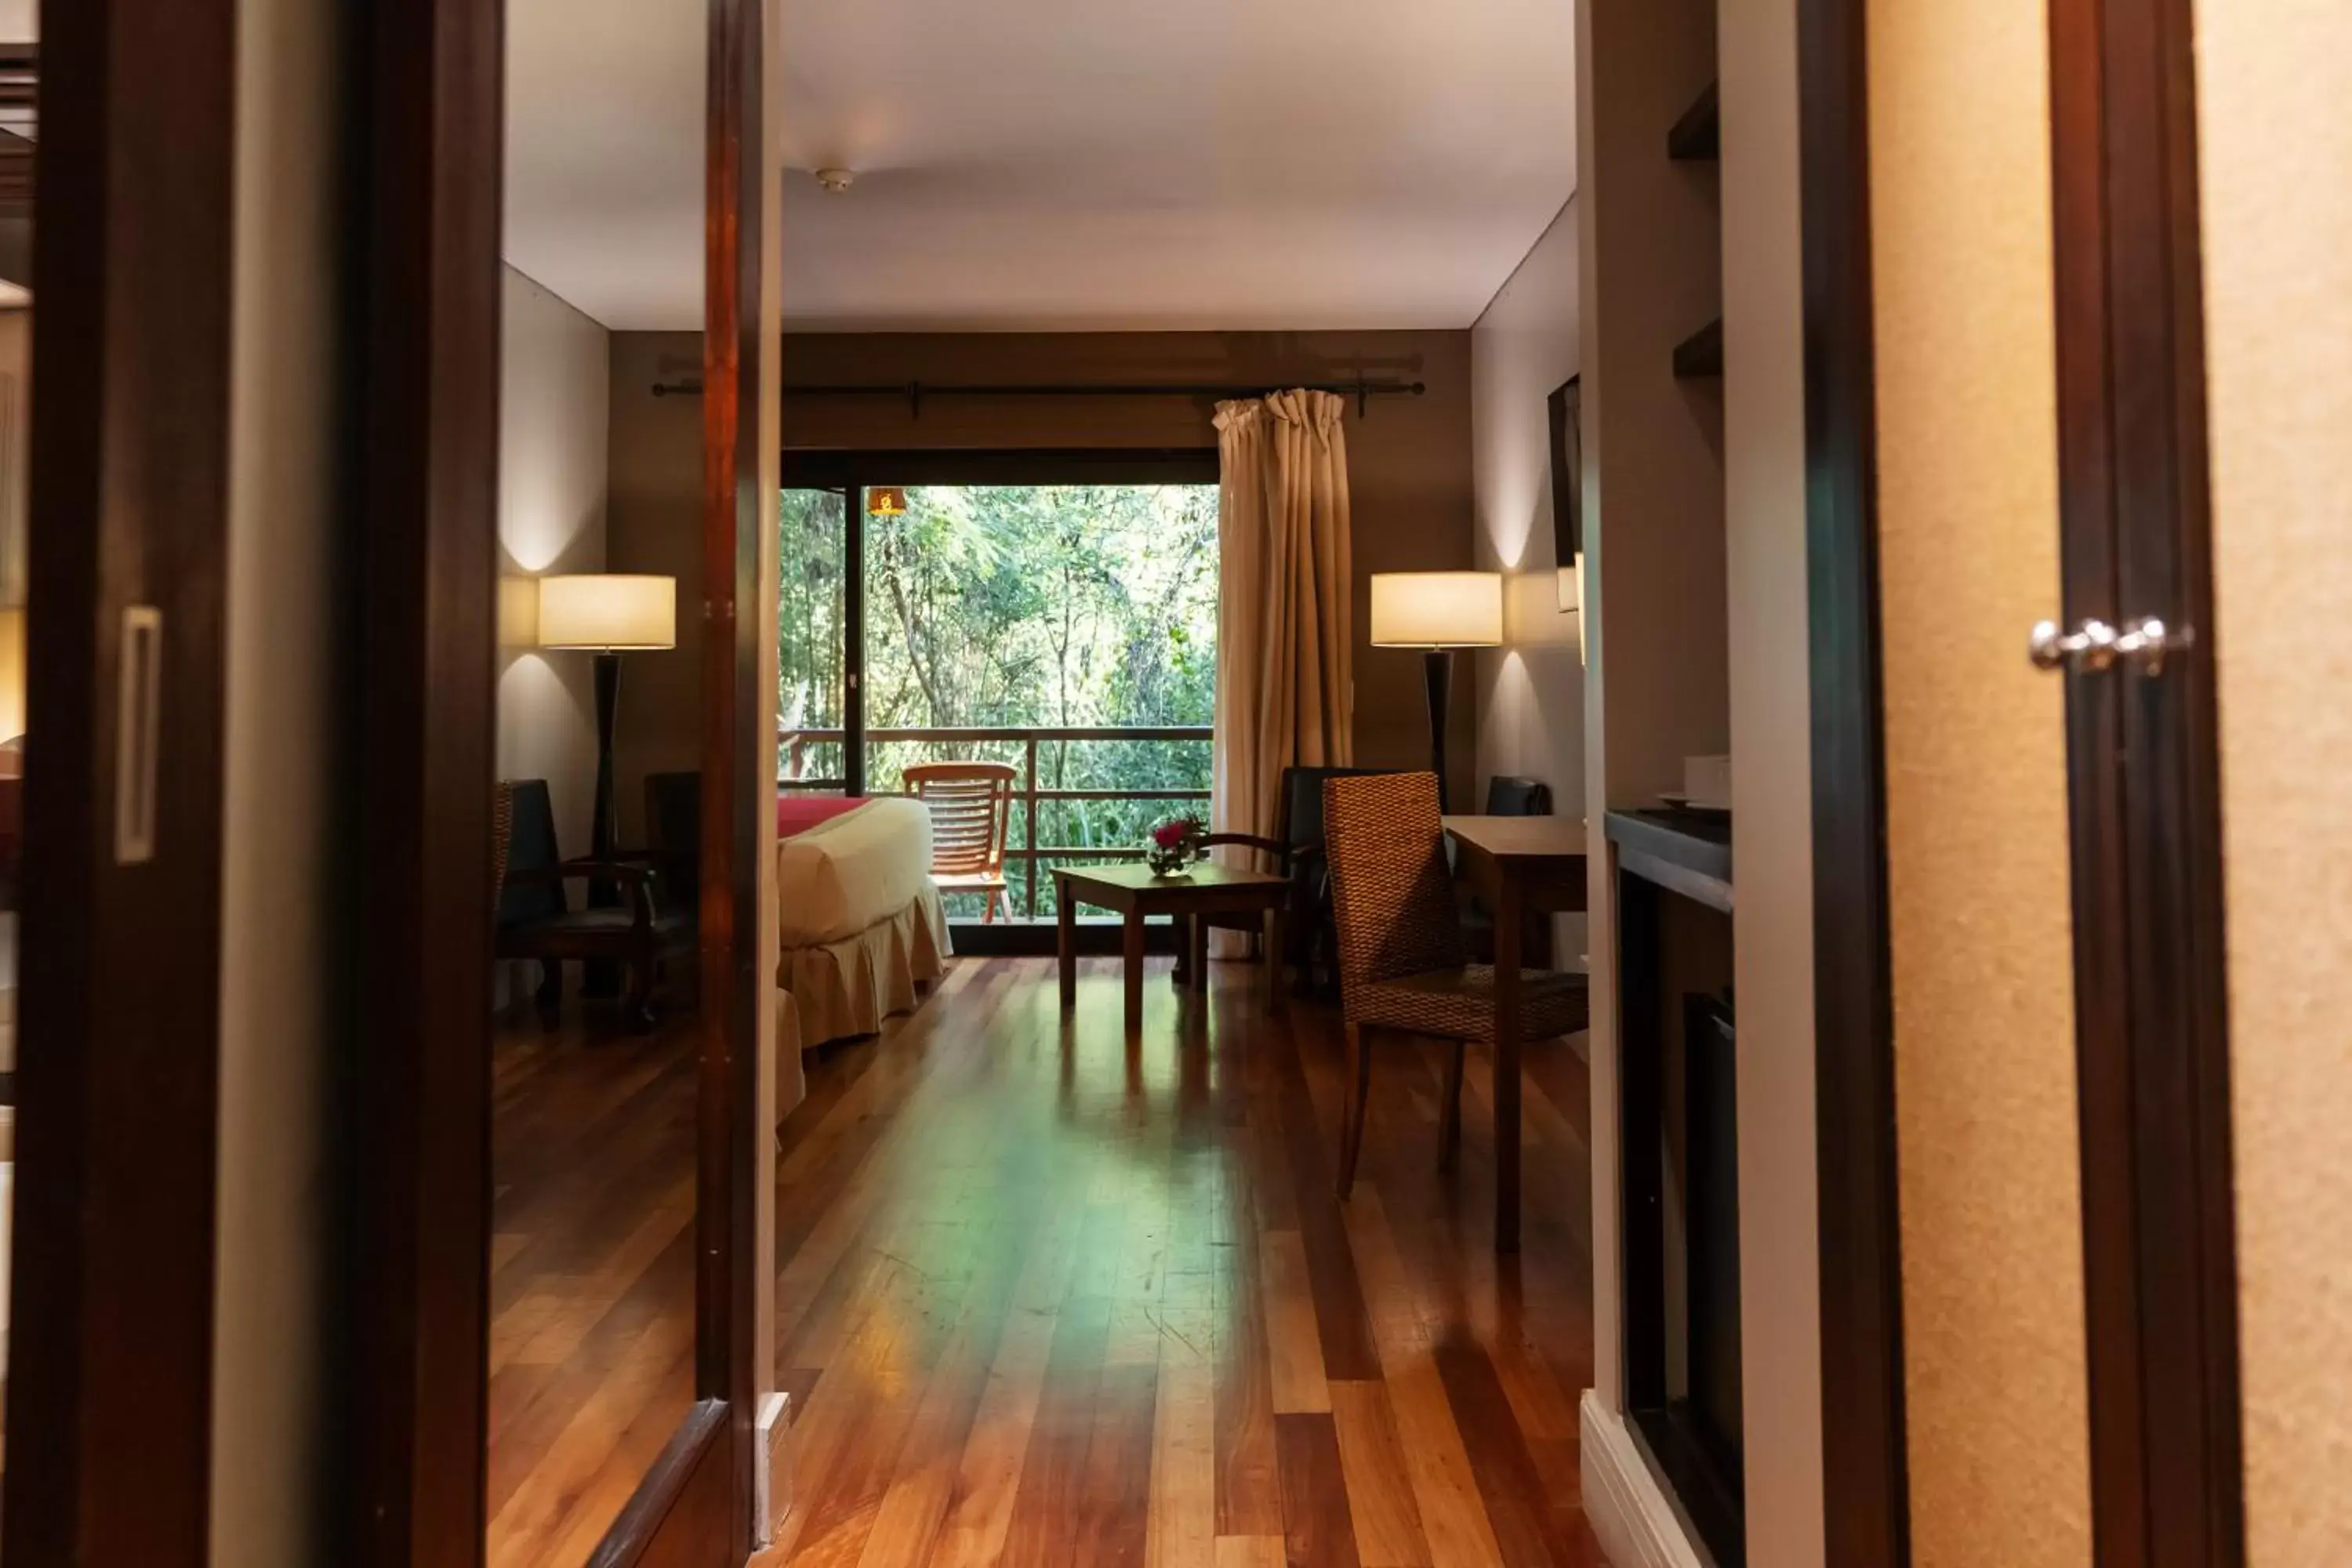 Photo of the whole room, Dining Area in Loi Suites Iguazu Hotel